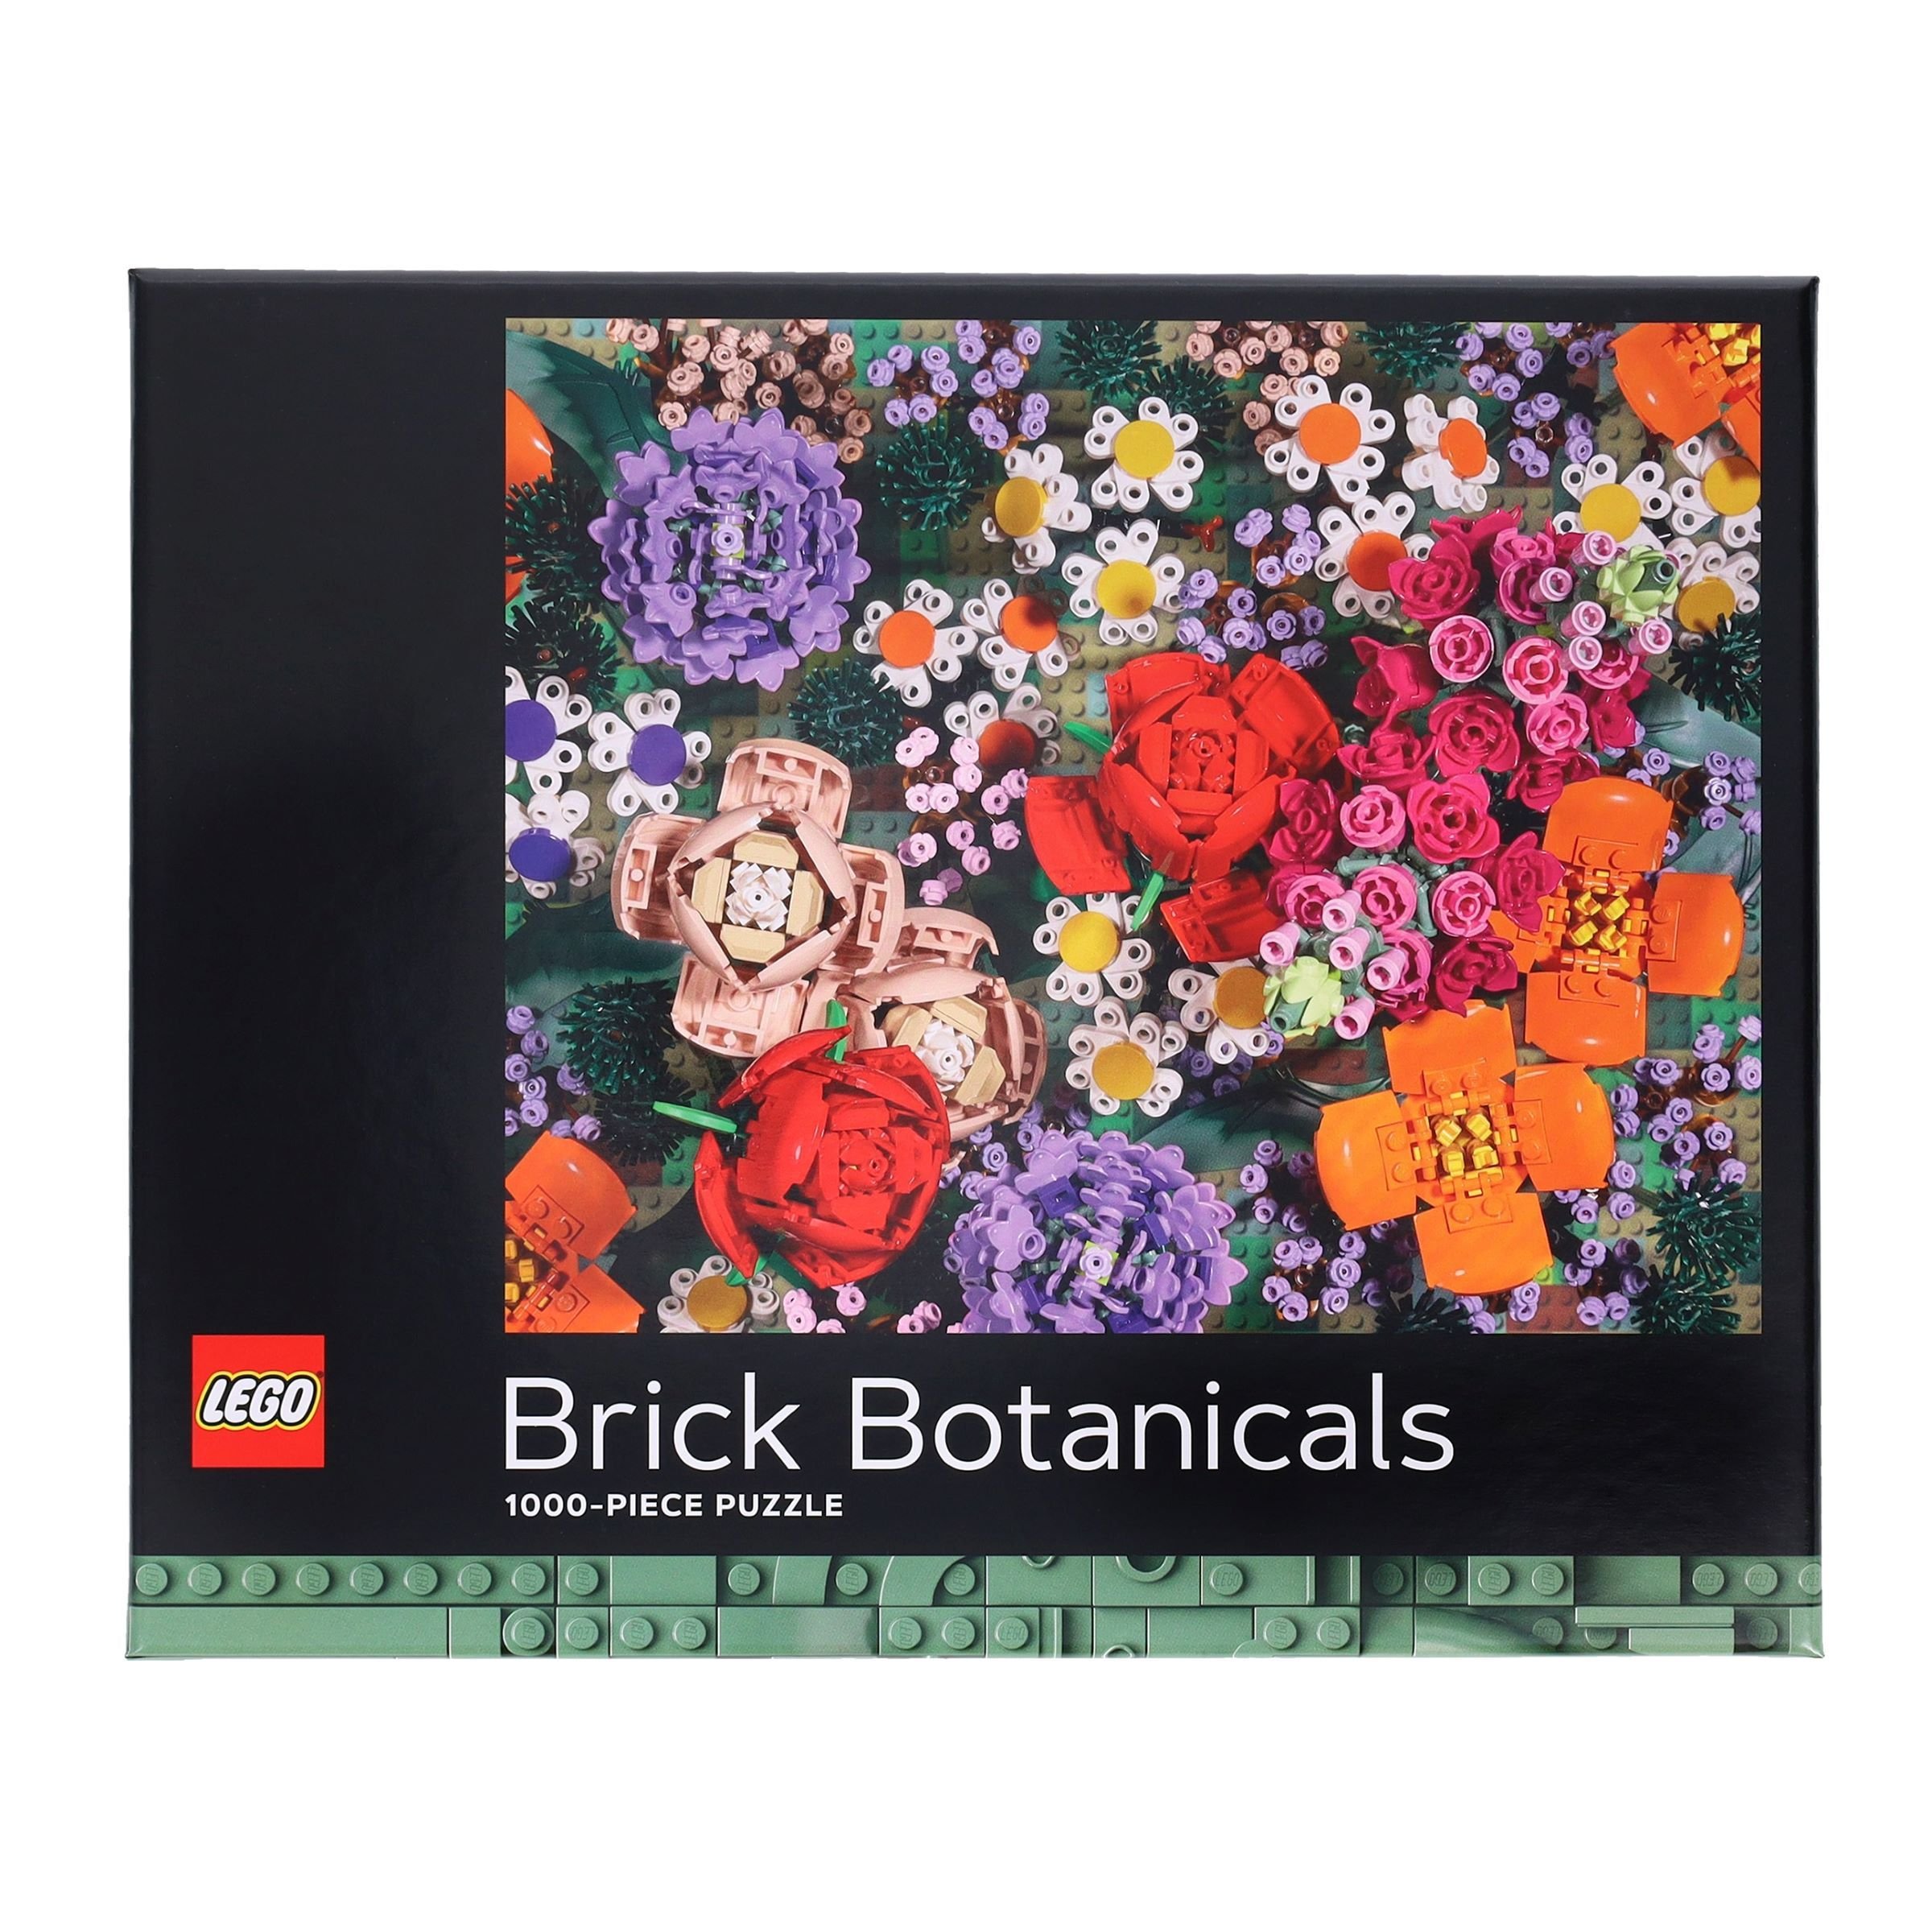 LEGO Gear 5007851 Brick Botanicals 1,000-Piece Puzzle LEGO_5007851_alt4.jpg